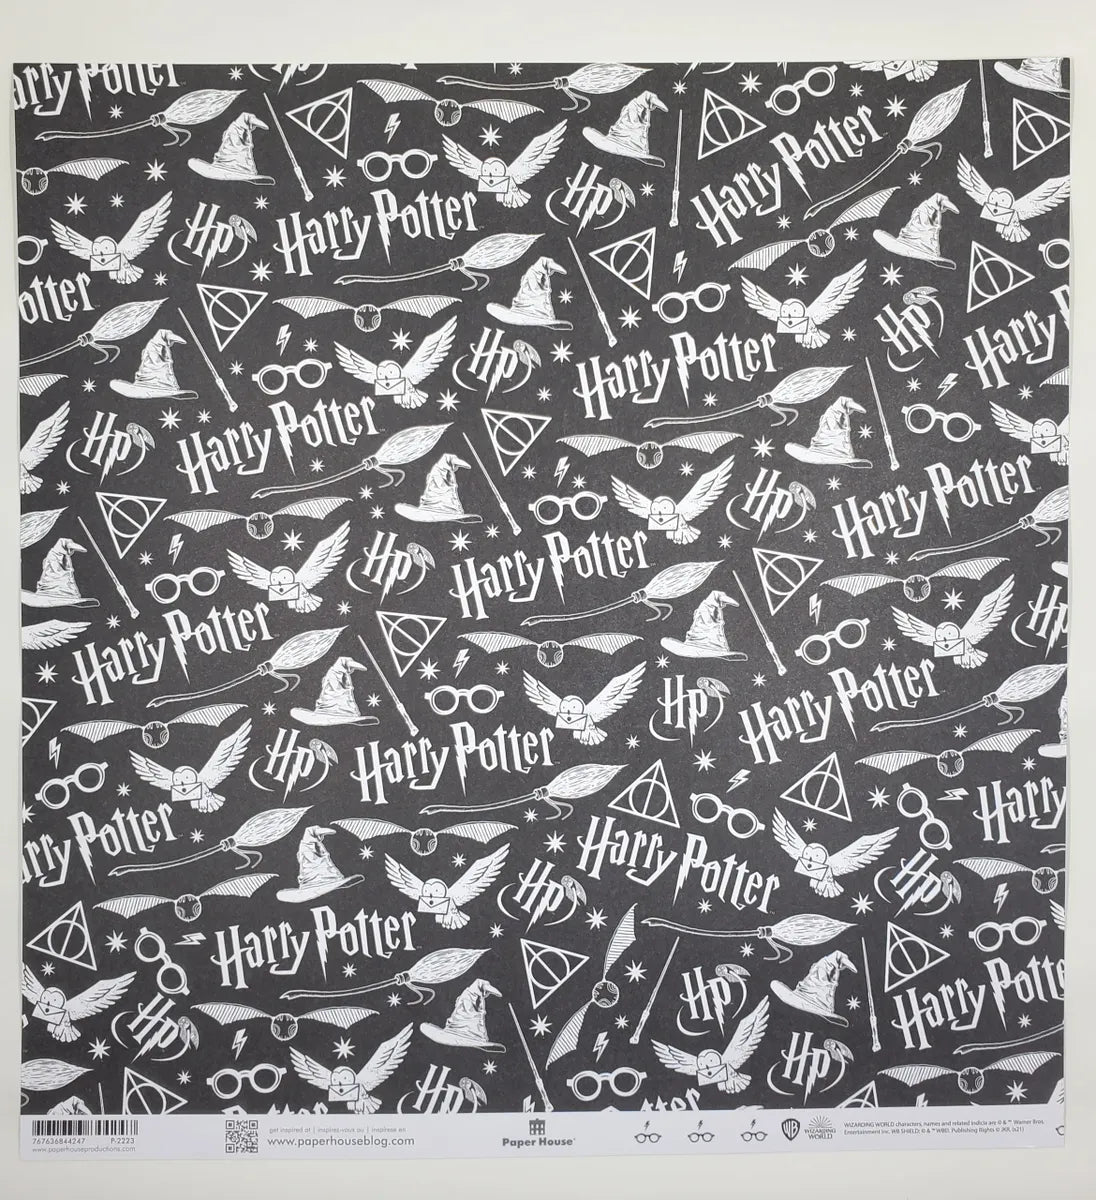 Harry Potter Symbols